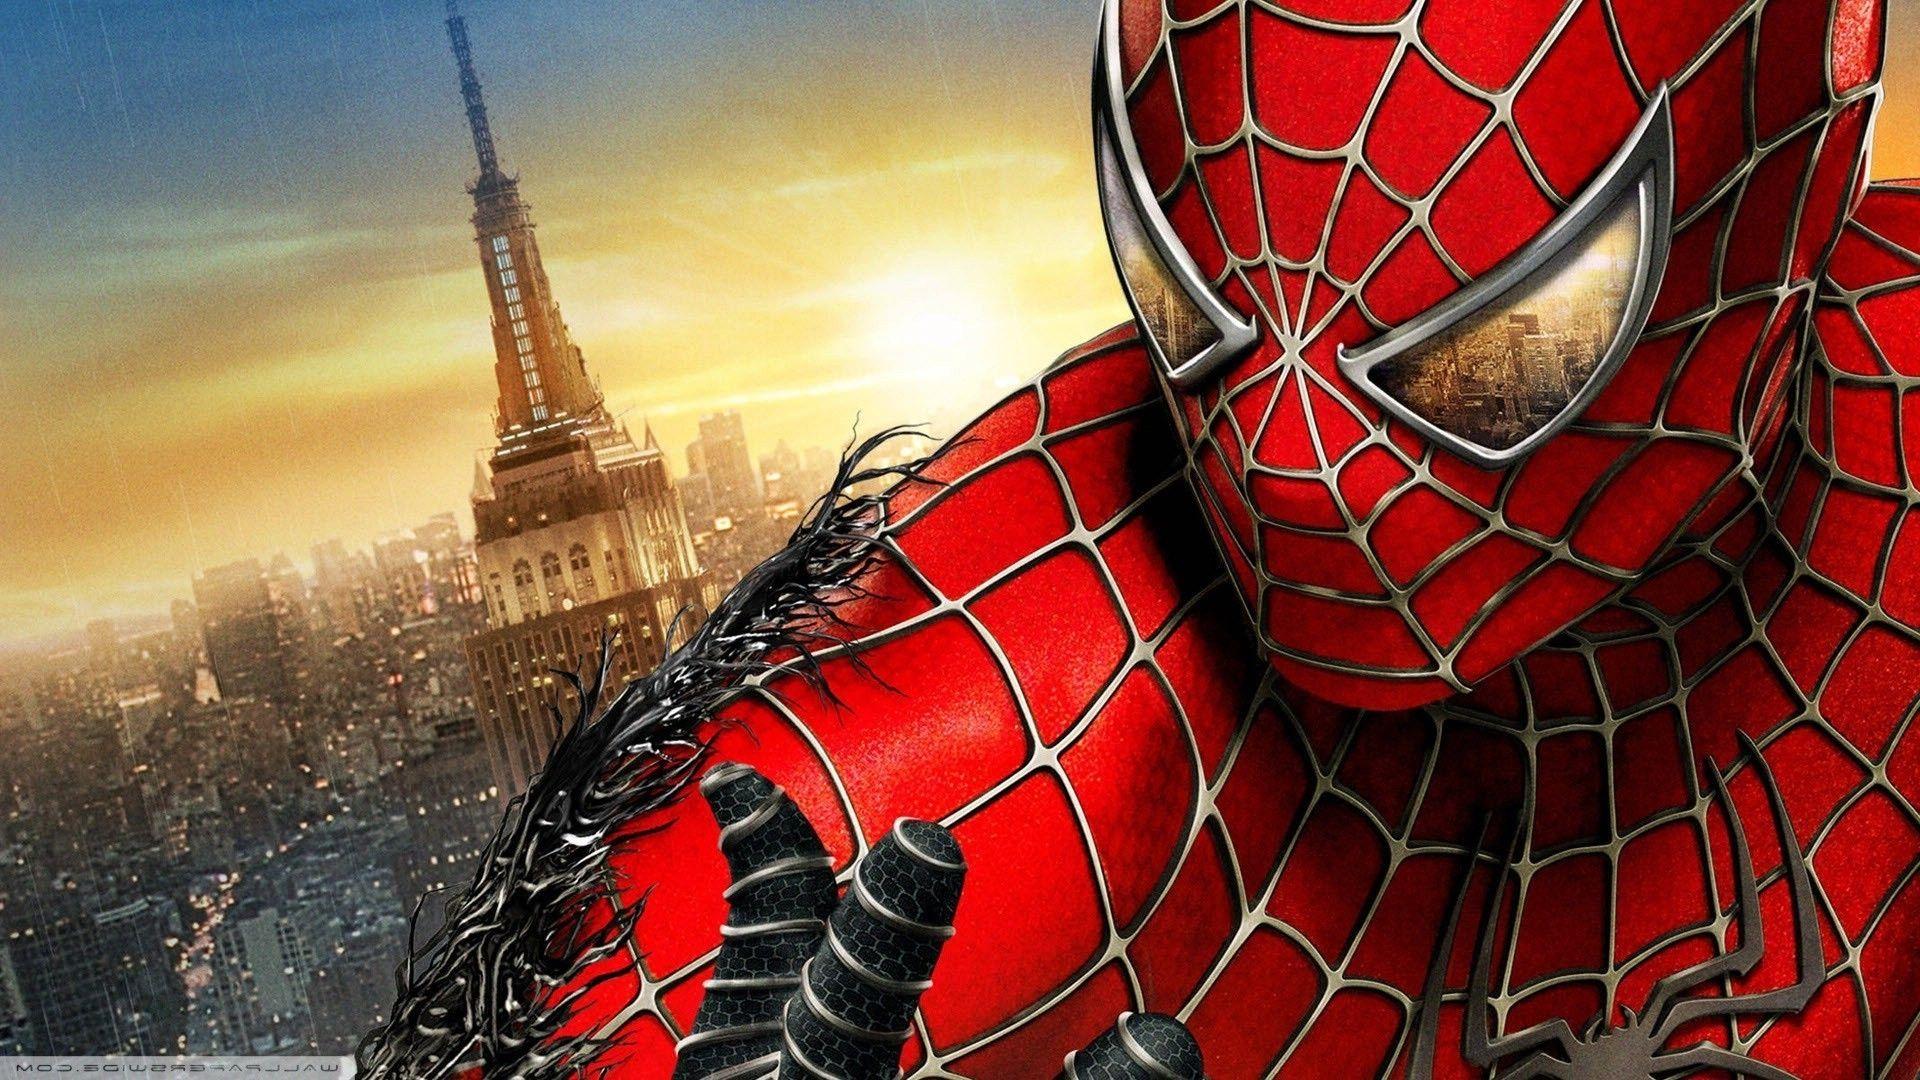 Spiderman 3 - Download